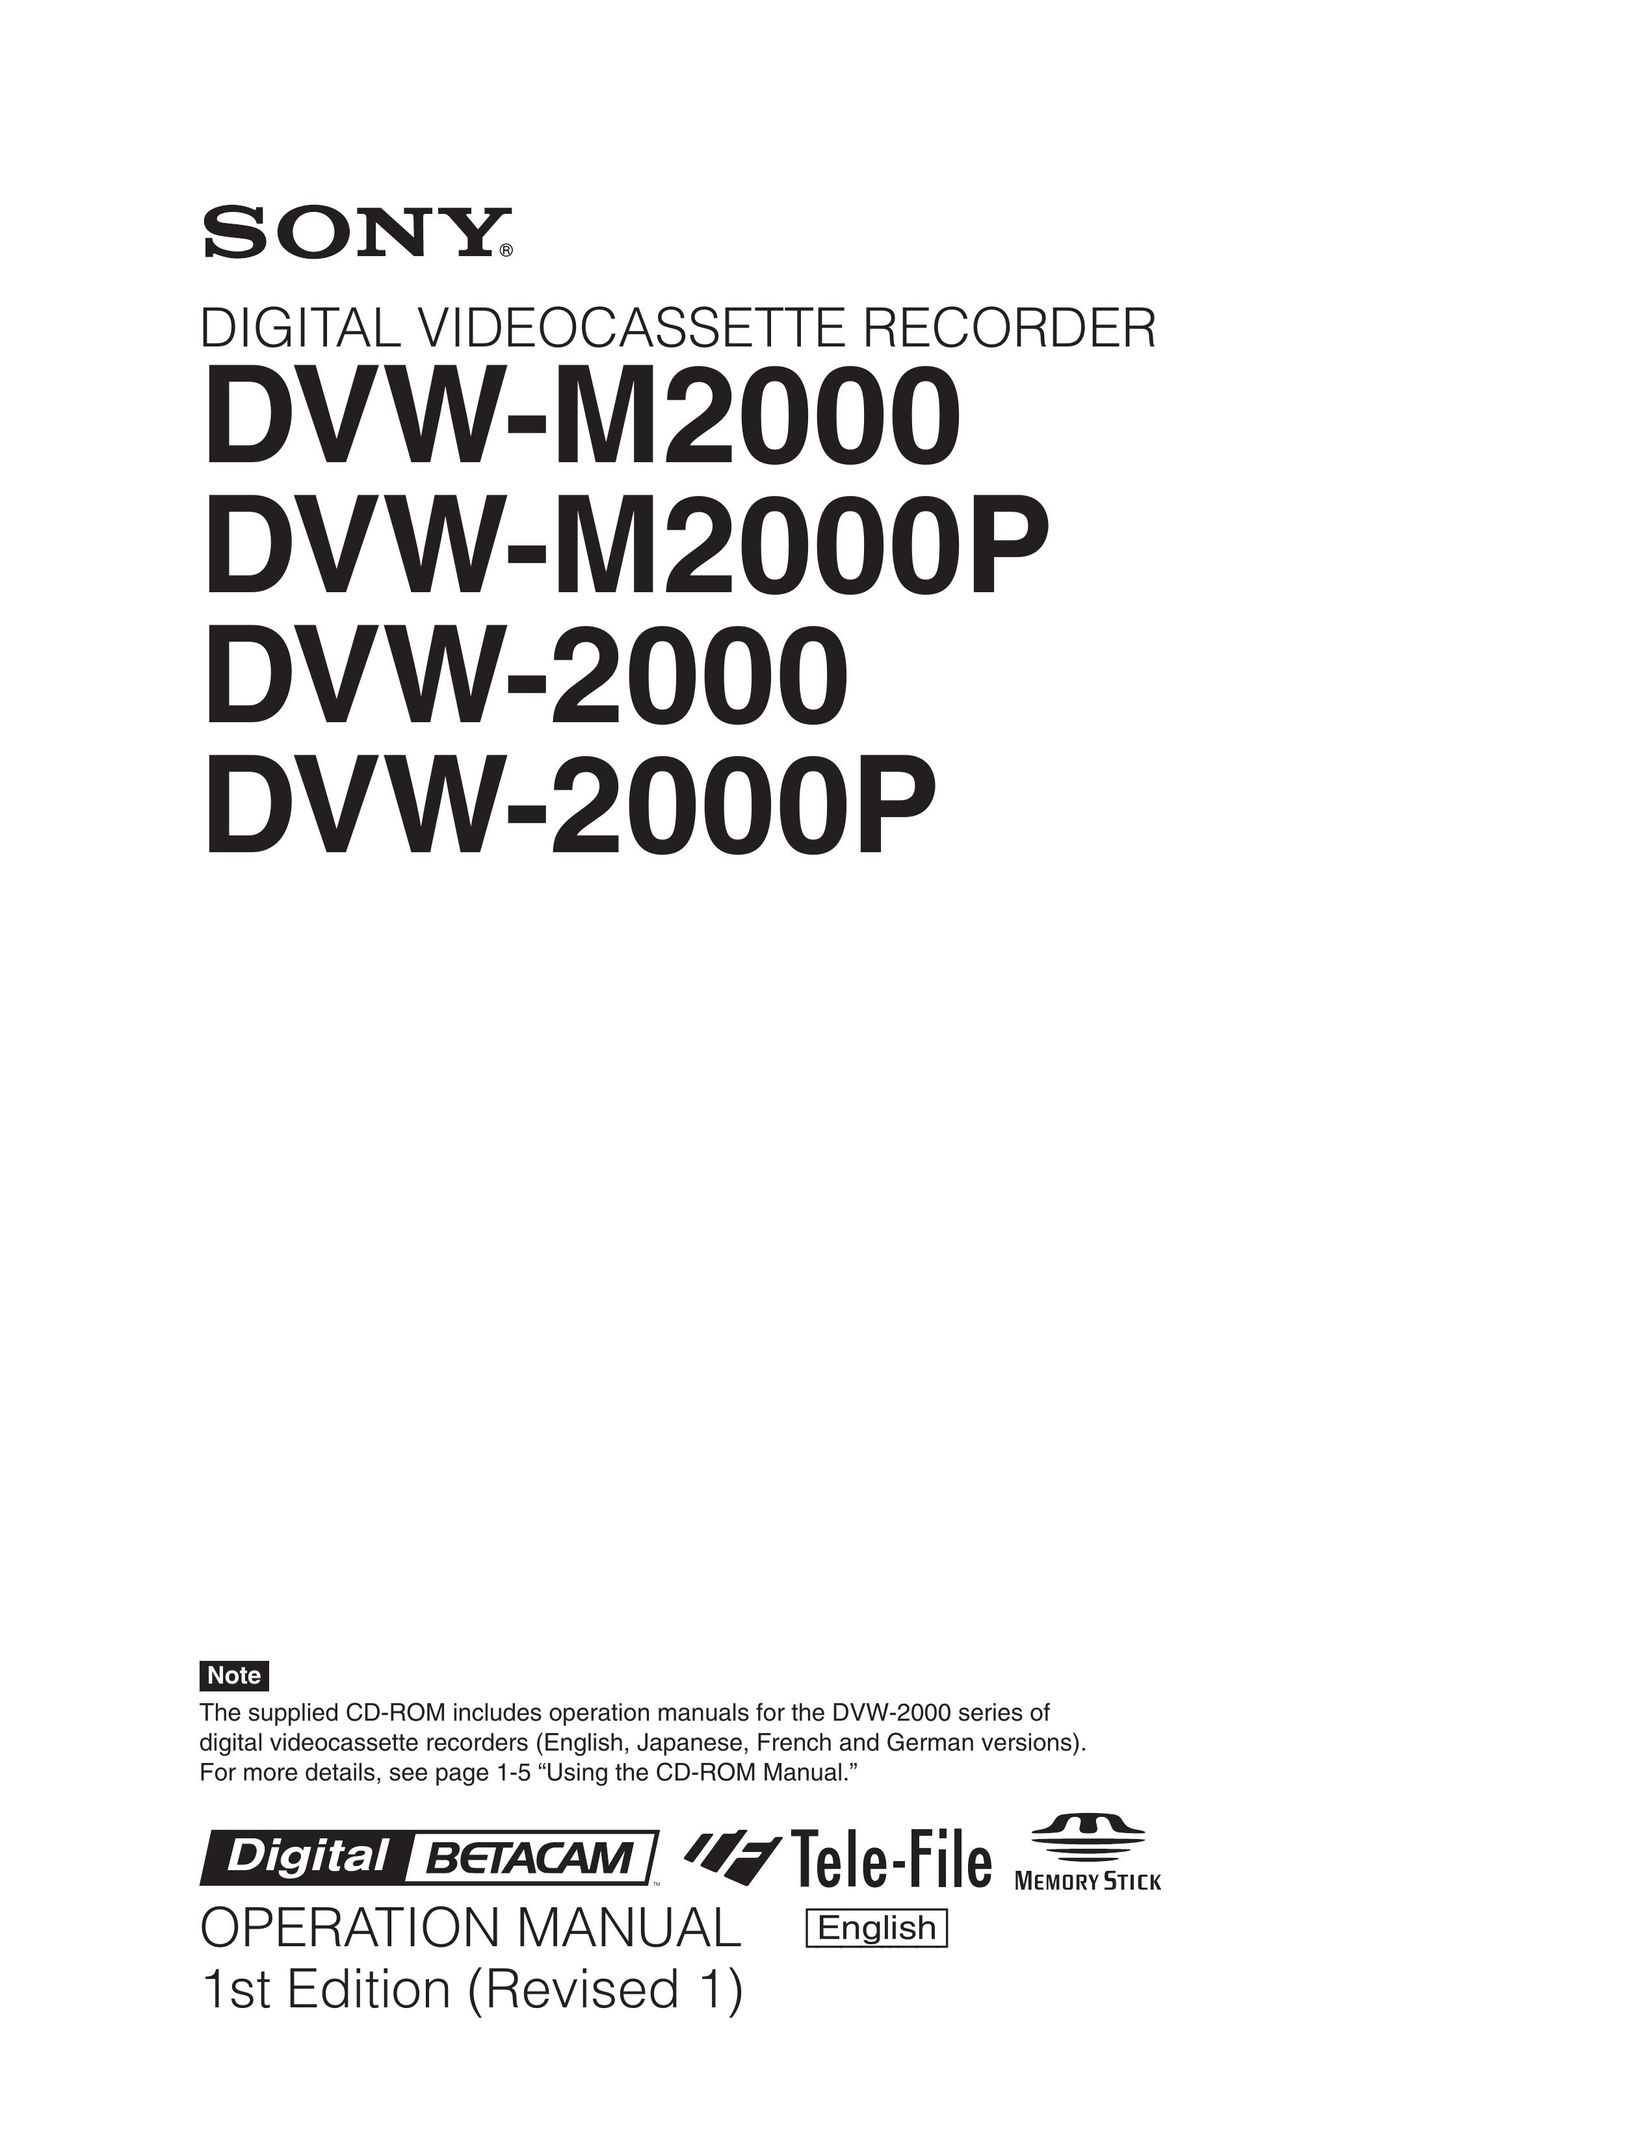 Sony DVW-2000P VCR User Manual